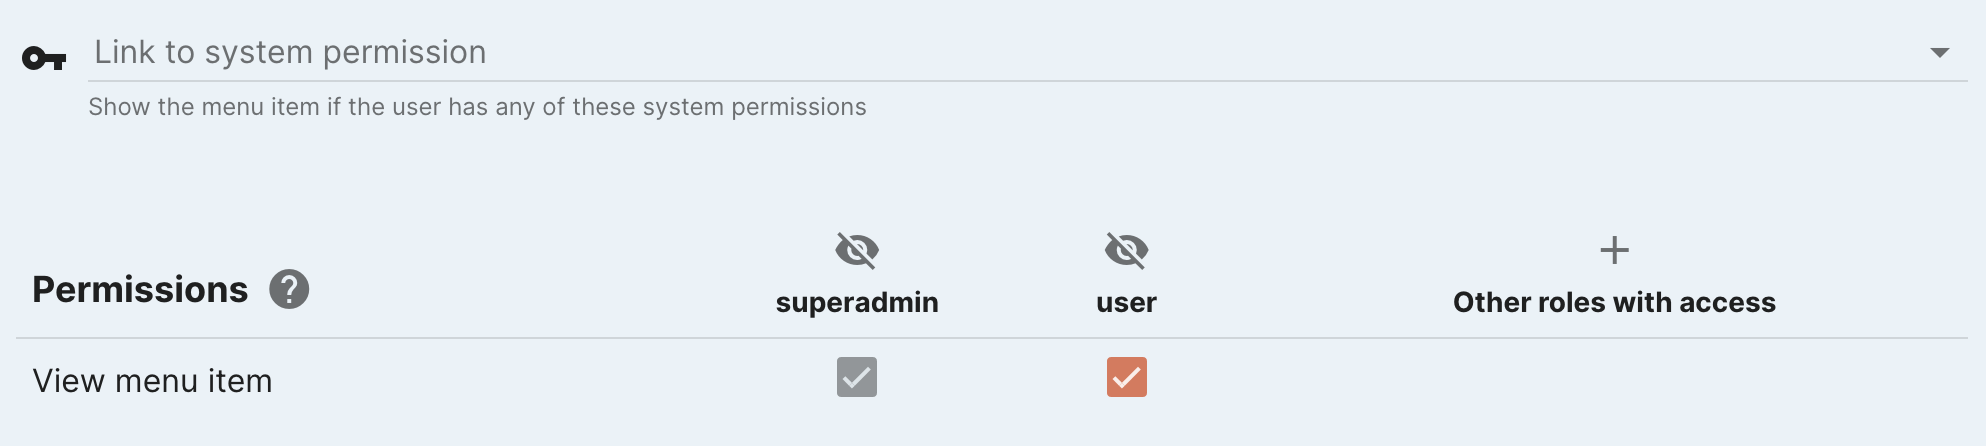 User permissions